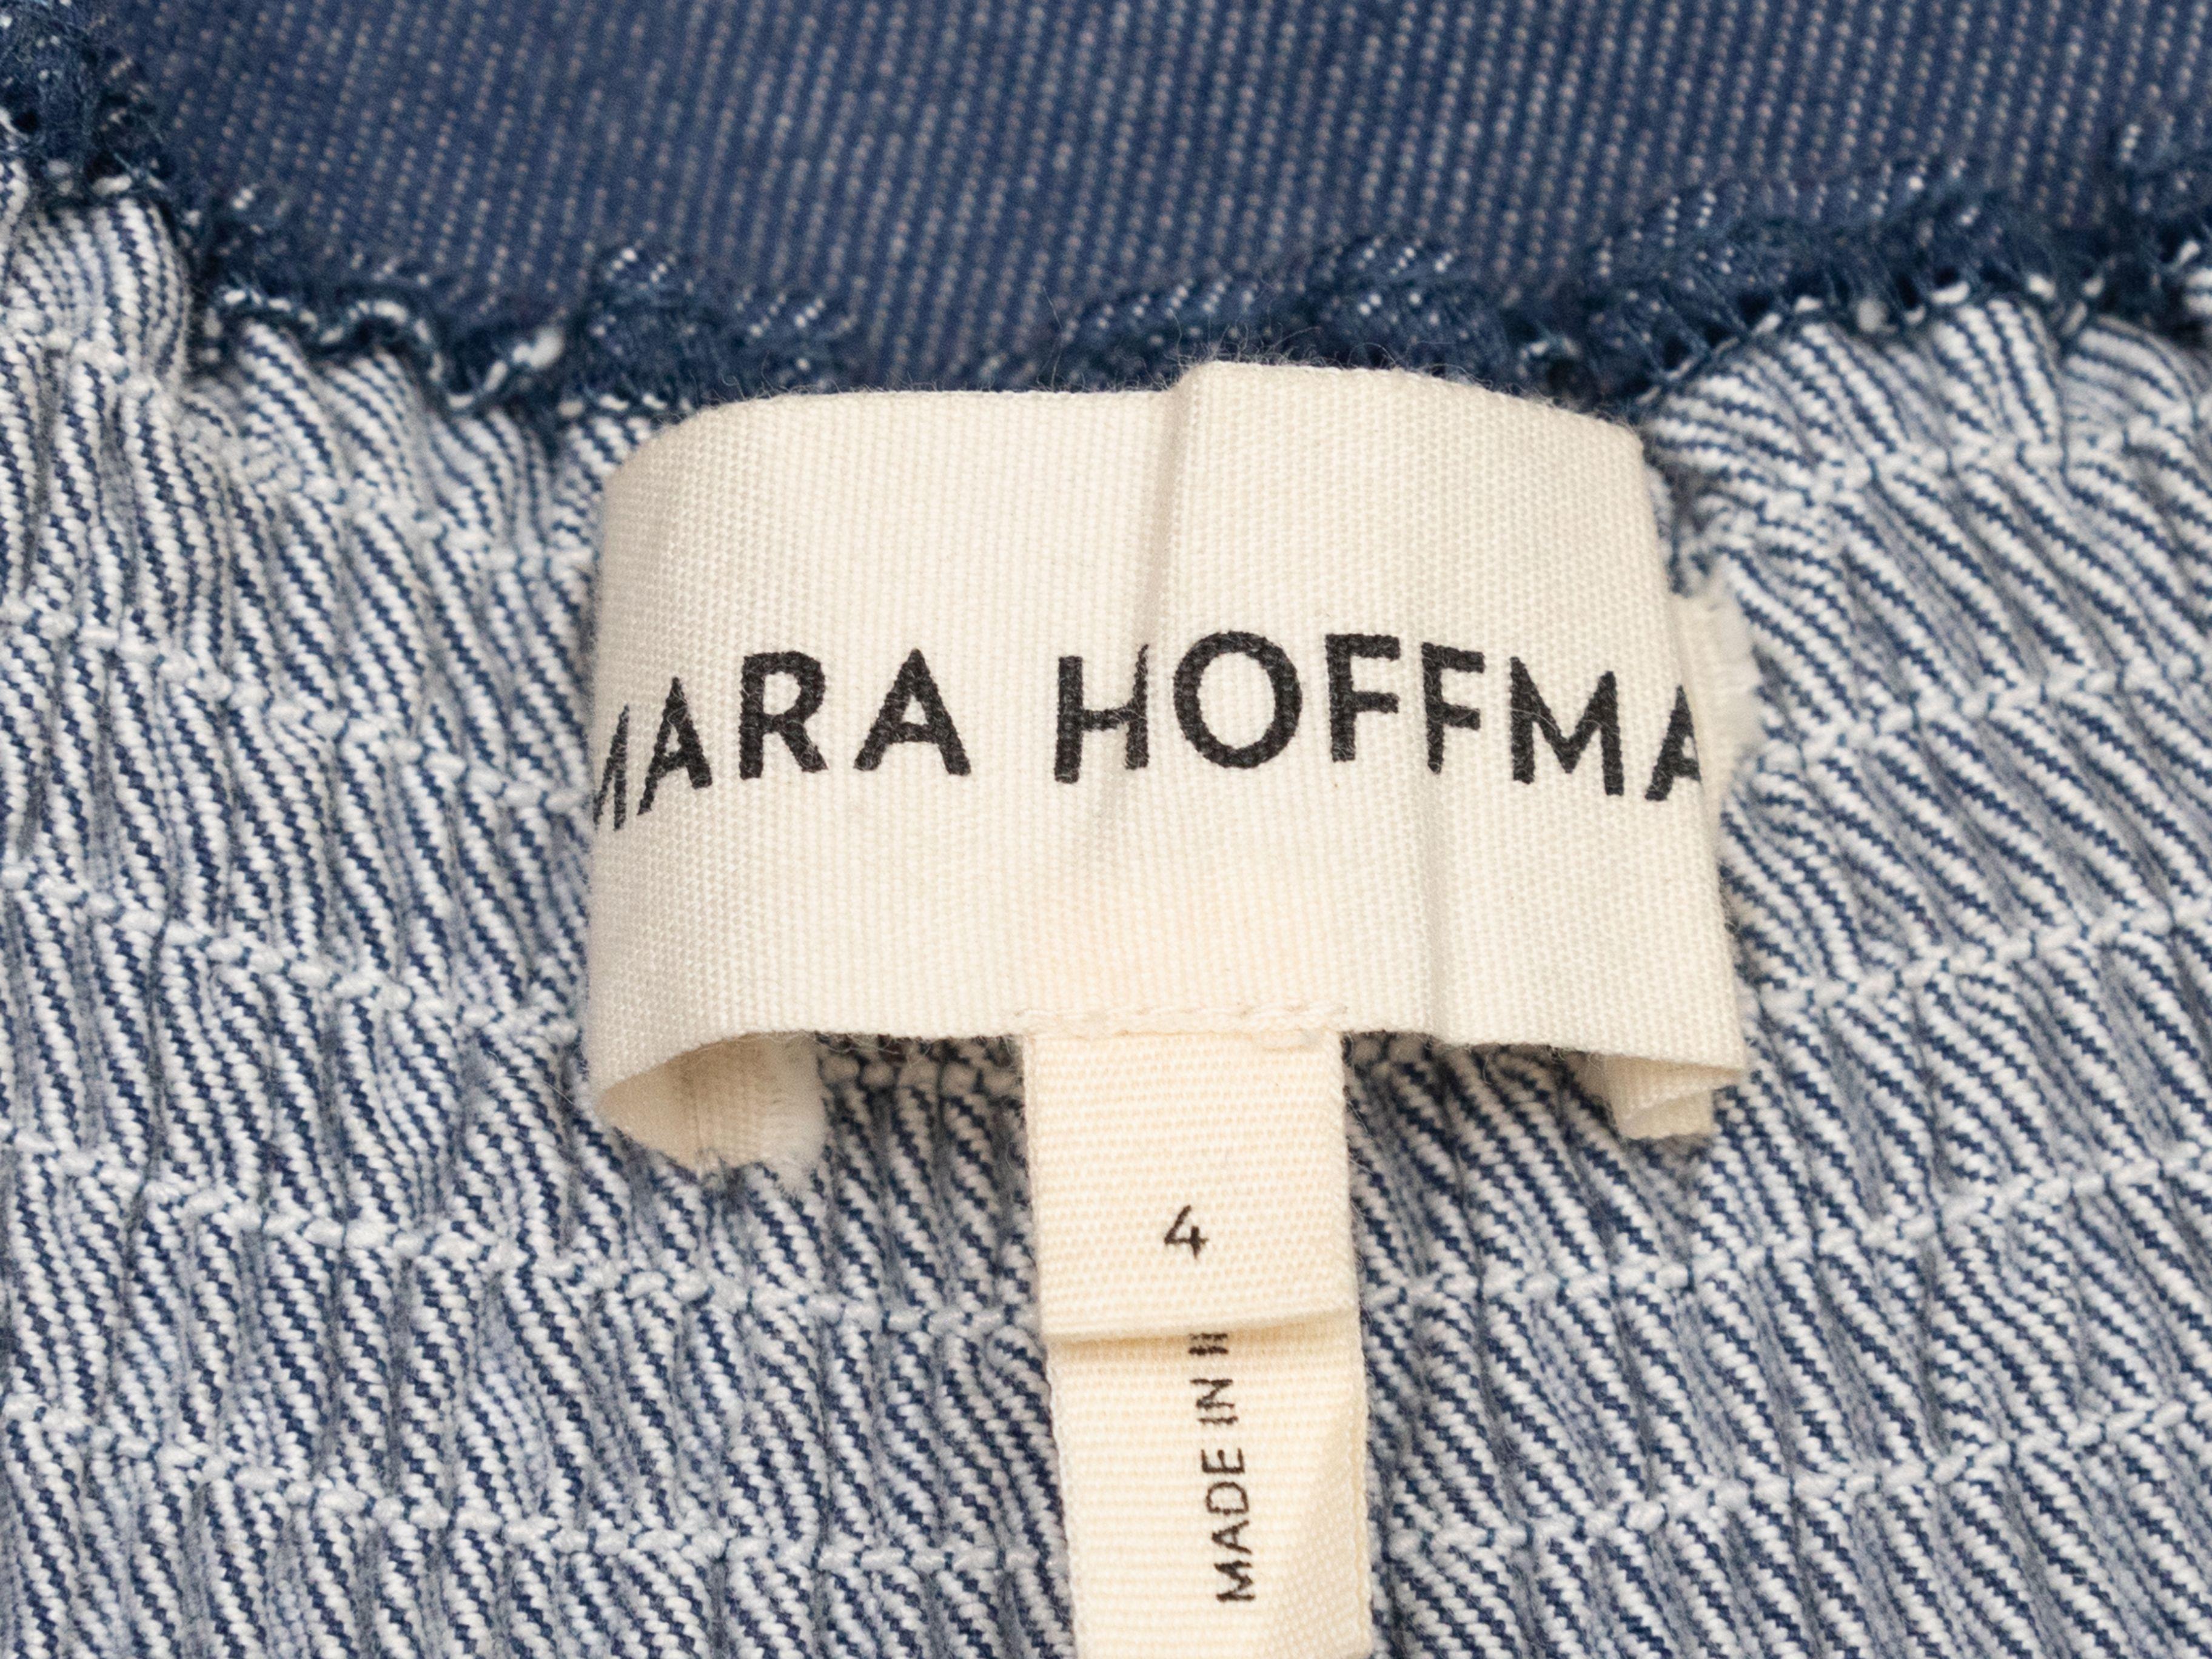 Product Details: Dark wash denim sleeveless maxi dress by Mara Hoffman. V-neck. Zip closure at center front. 28